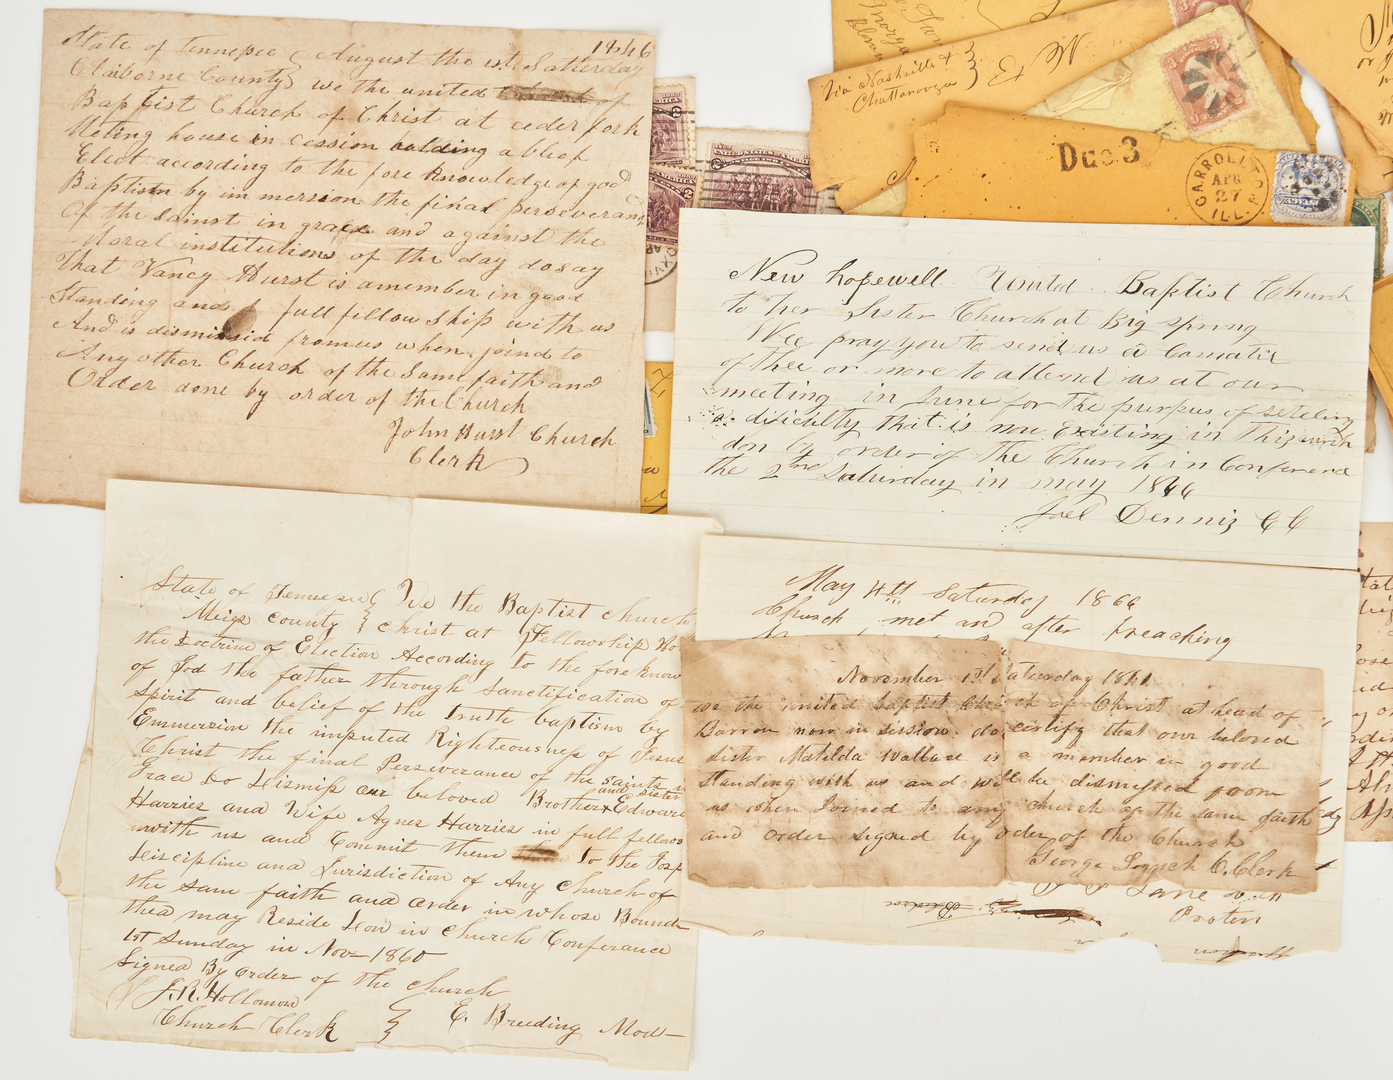 Lot 611: 63 Civil War ephemera items, incl. Soldier Ambrotype, Autograph Album, Johnson's Island Envelopes